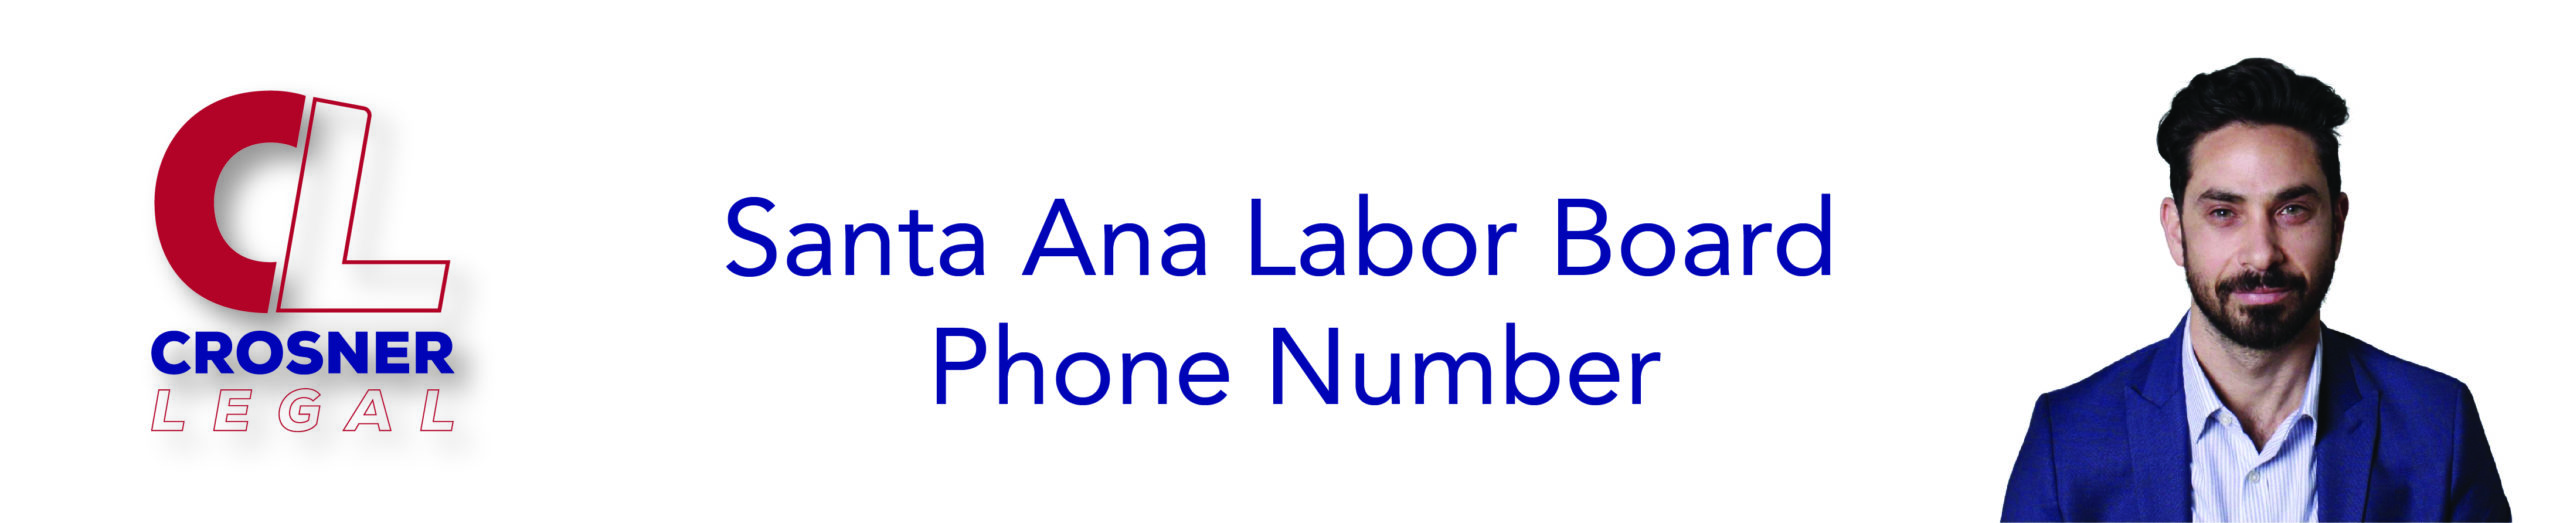 Santa Ana Labor Board Phone Number